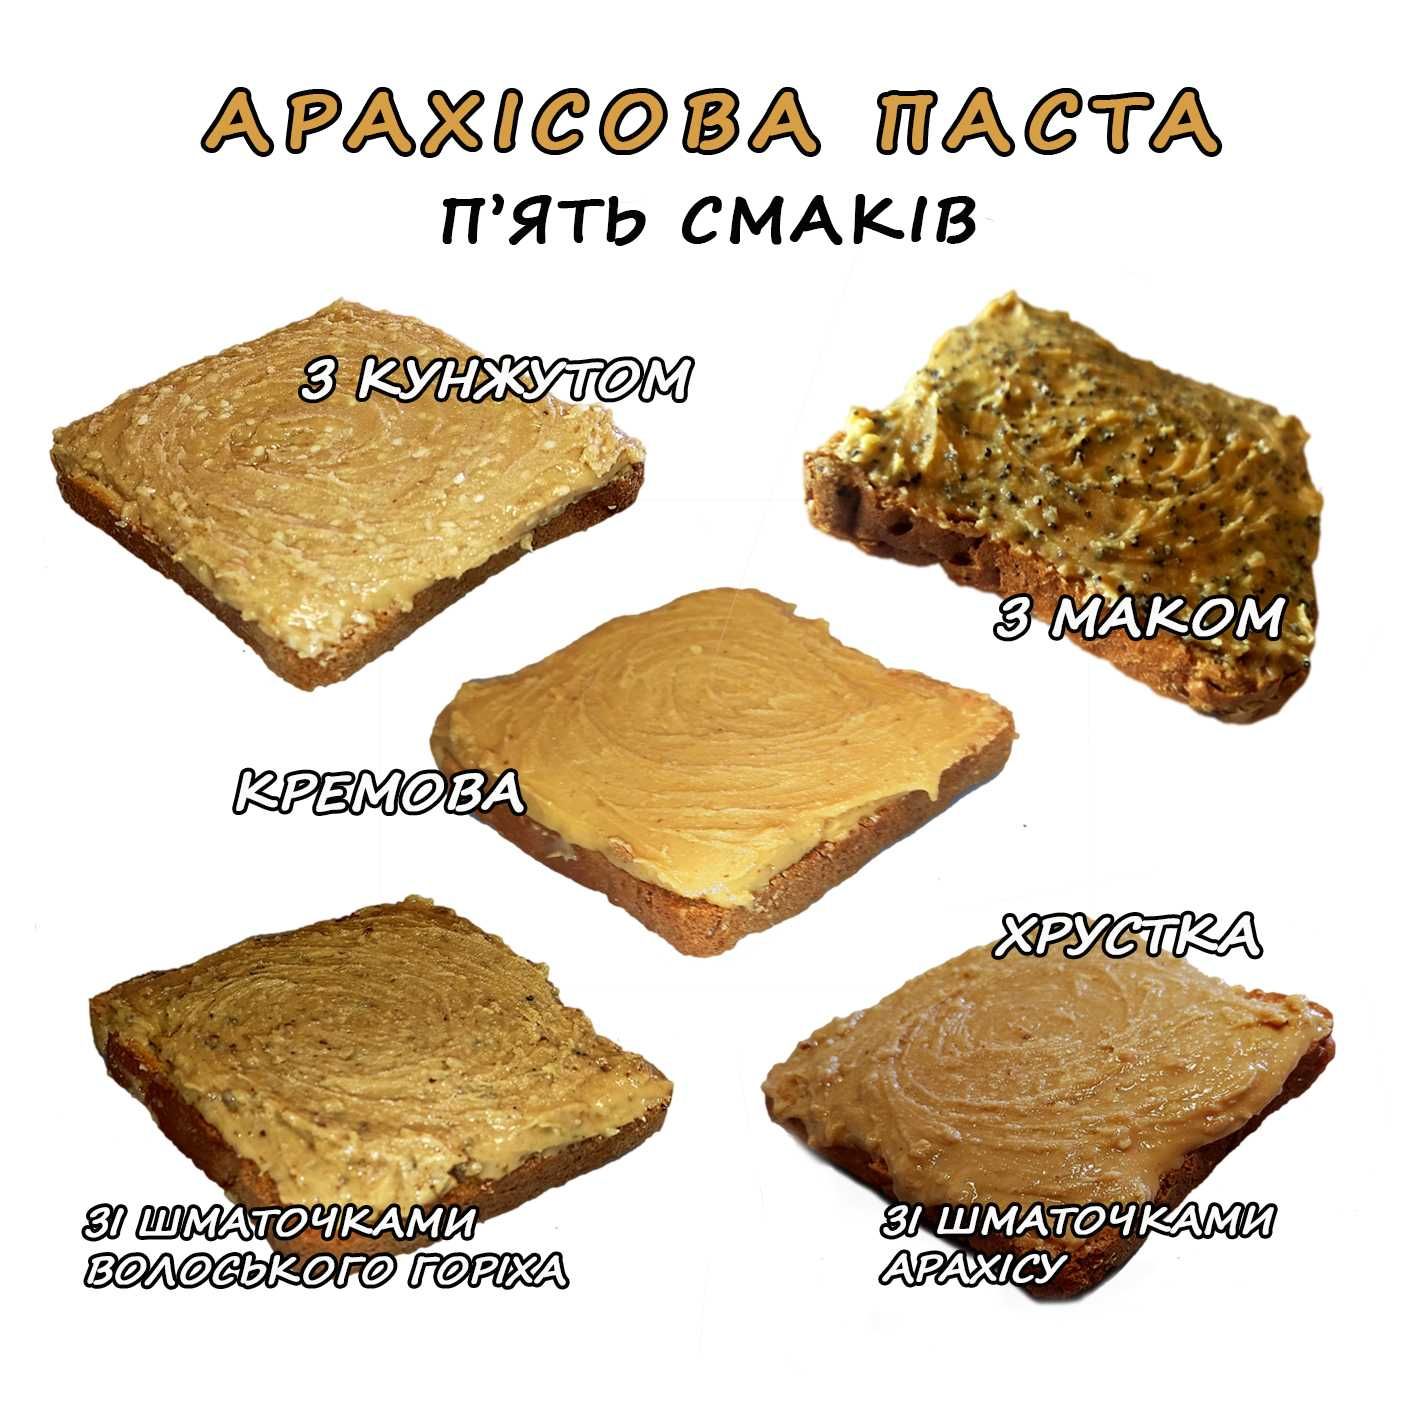 Арахісова паста YakSobi - 100% натуральна, без цукру та інших добавок